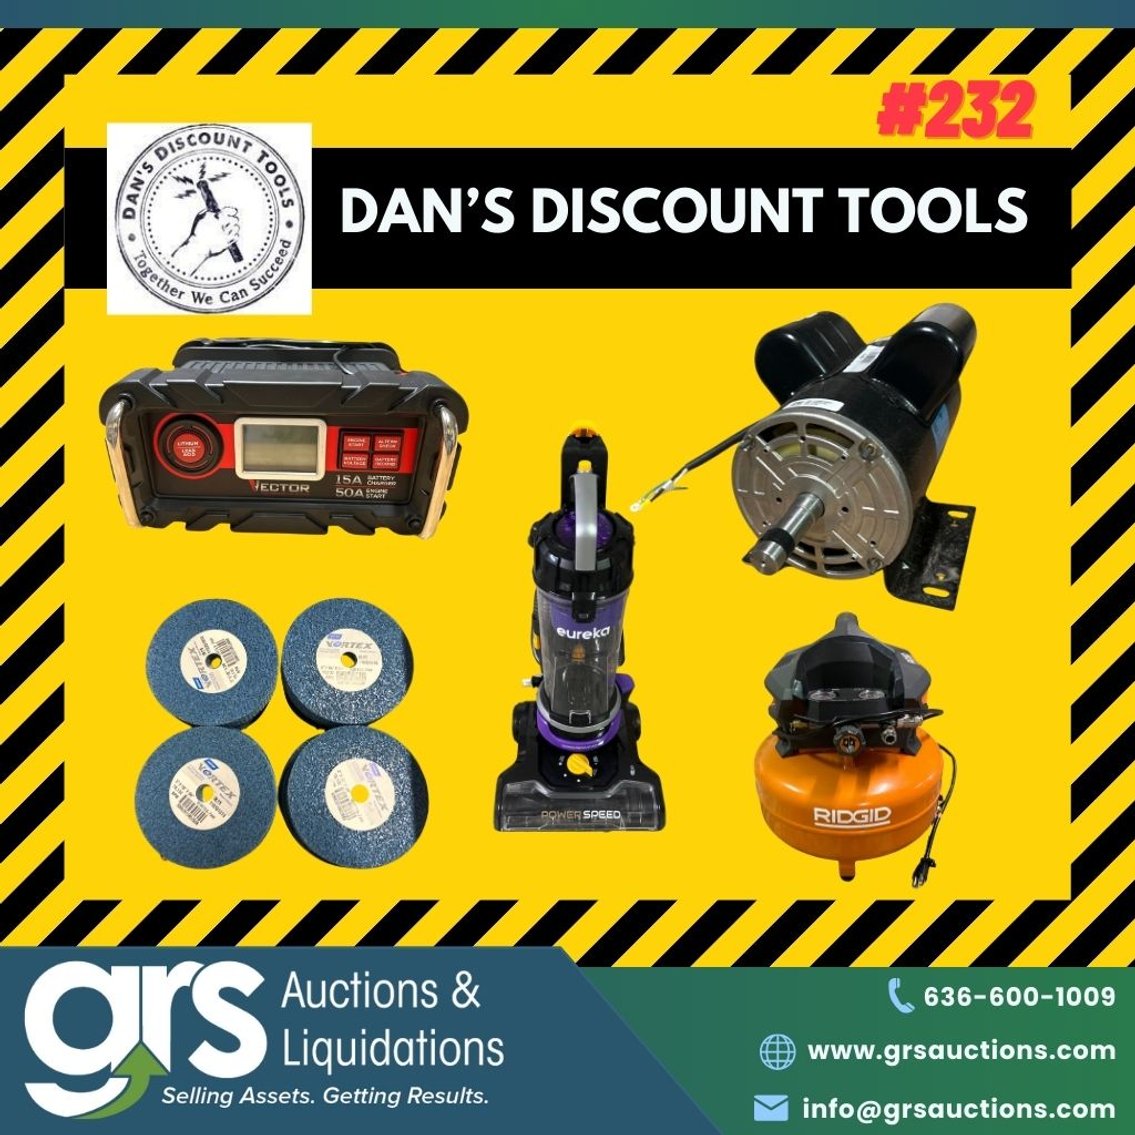 Dan's Discount Tools #232